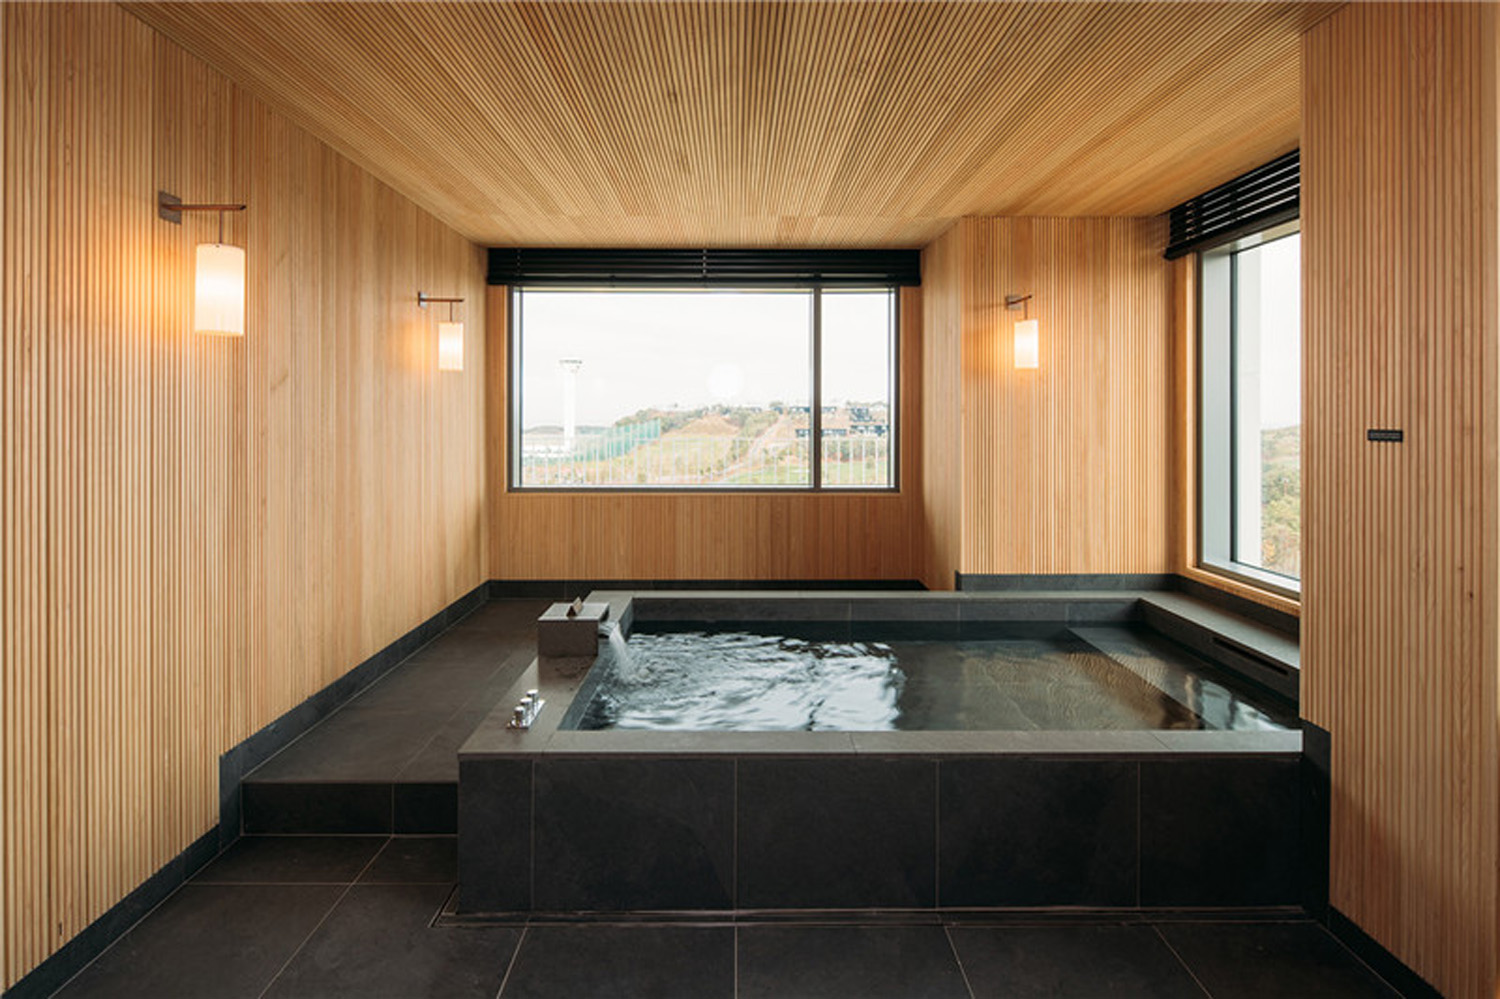 Hotel bath space design